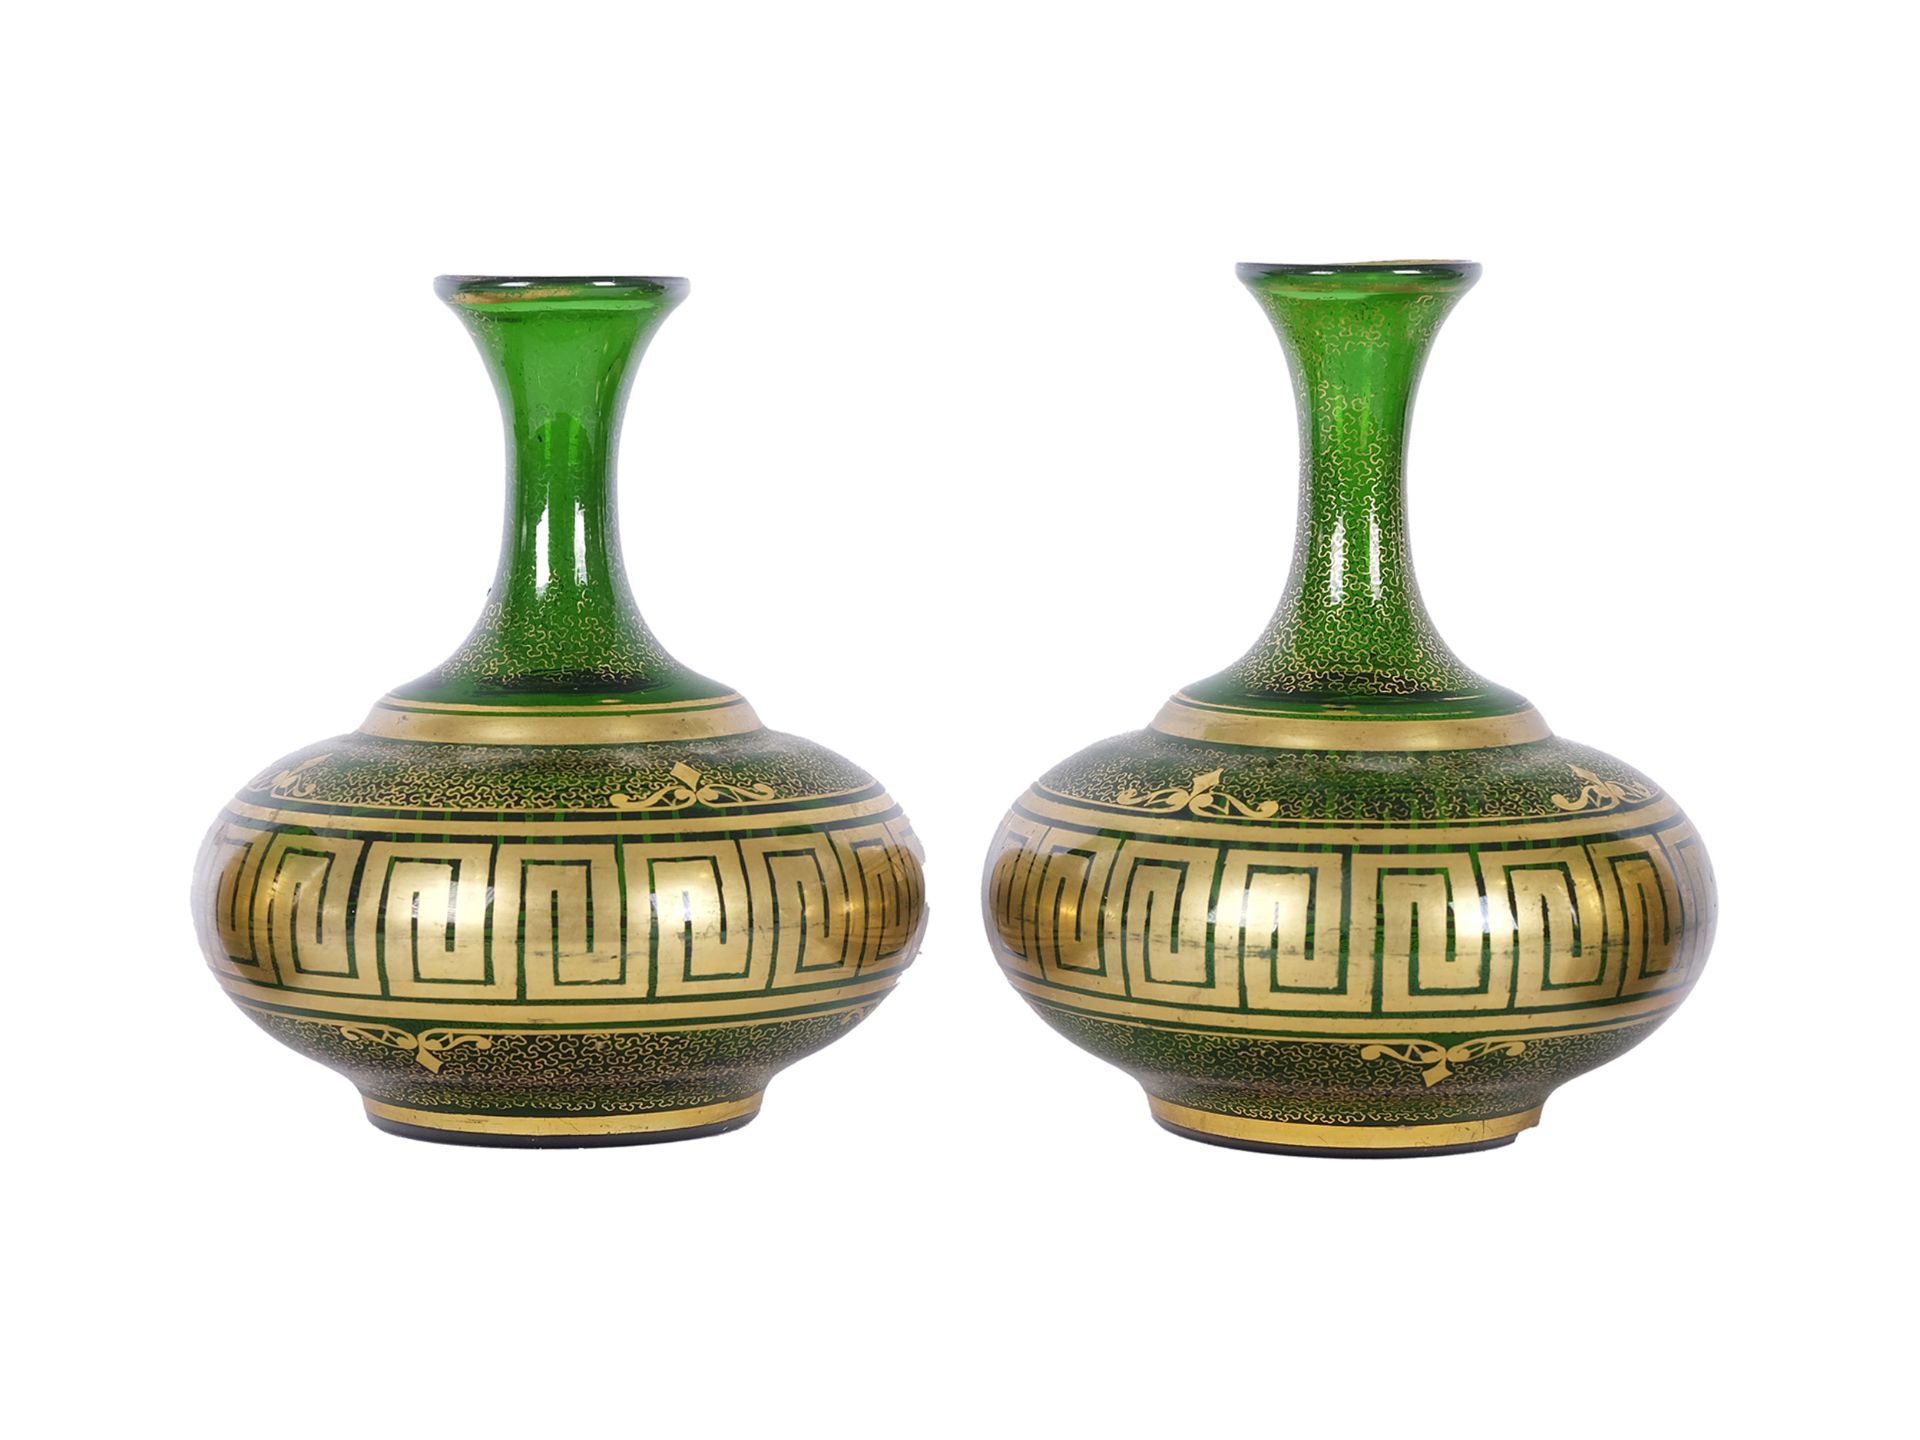 Pair of glass flasks, Biedermeier, around 1840 - Image 2 of 2